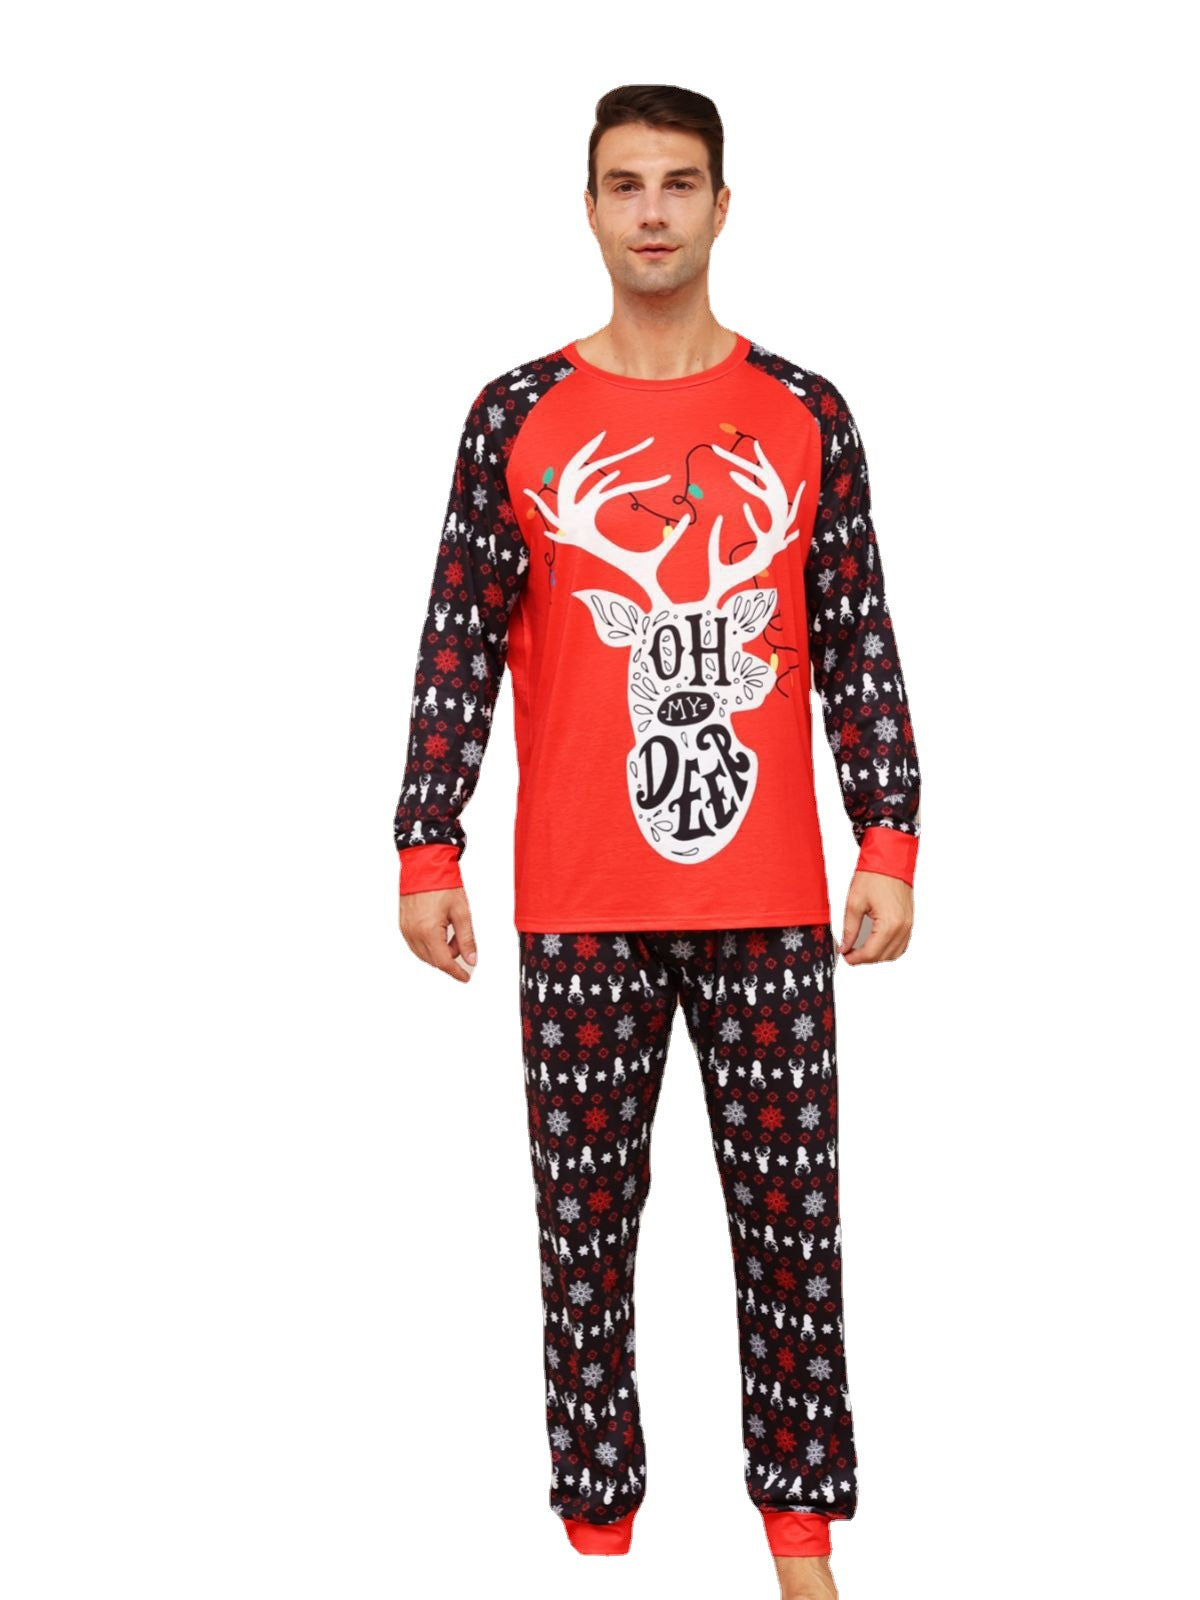 BamBam Letter Snowflake Deer Printed Christmas Parent-Child Pajamas Outfit Home Clothes - BamBam